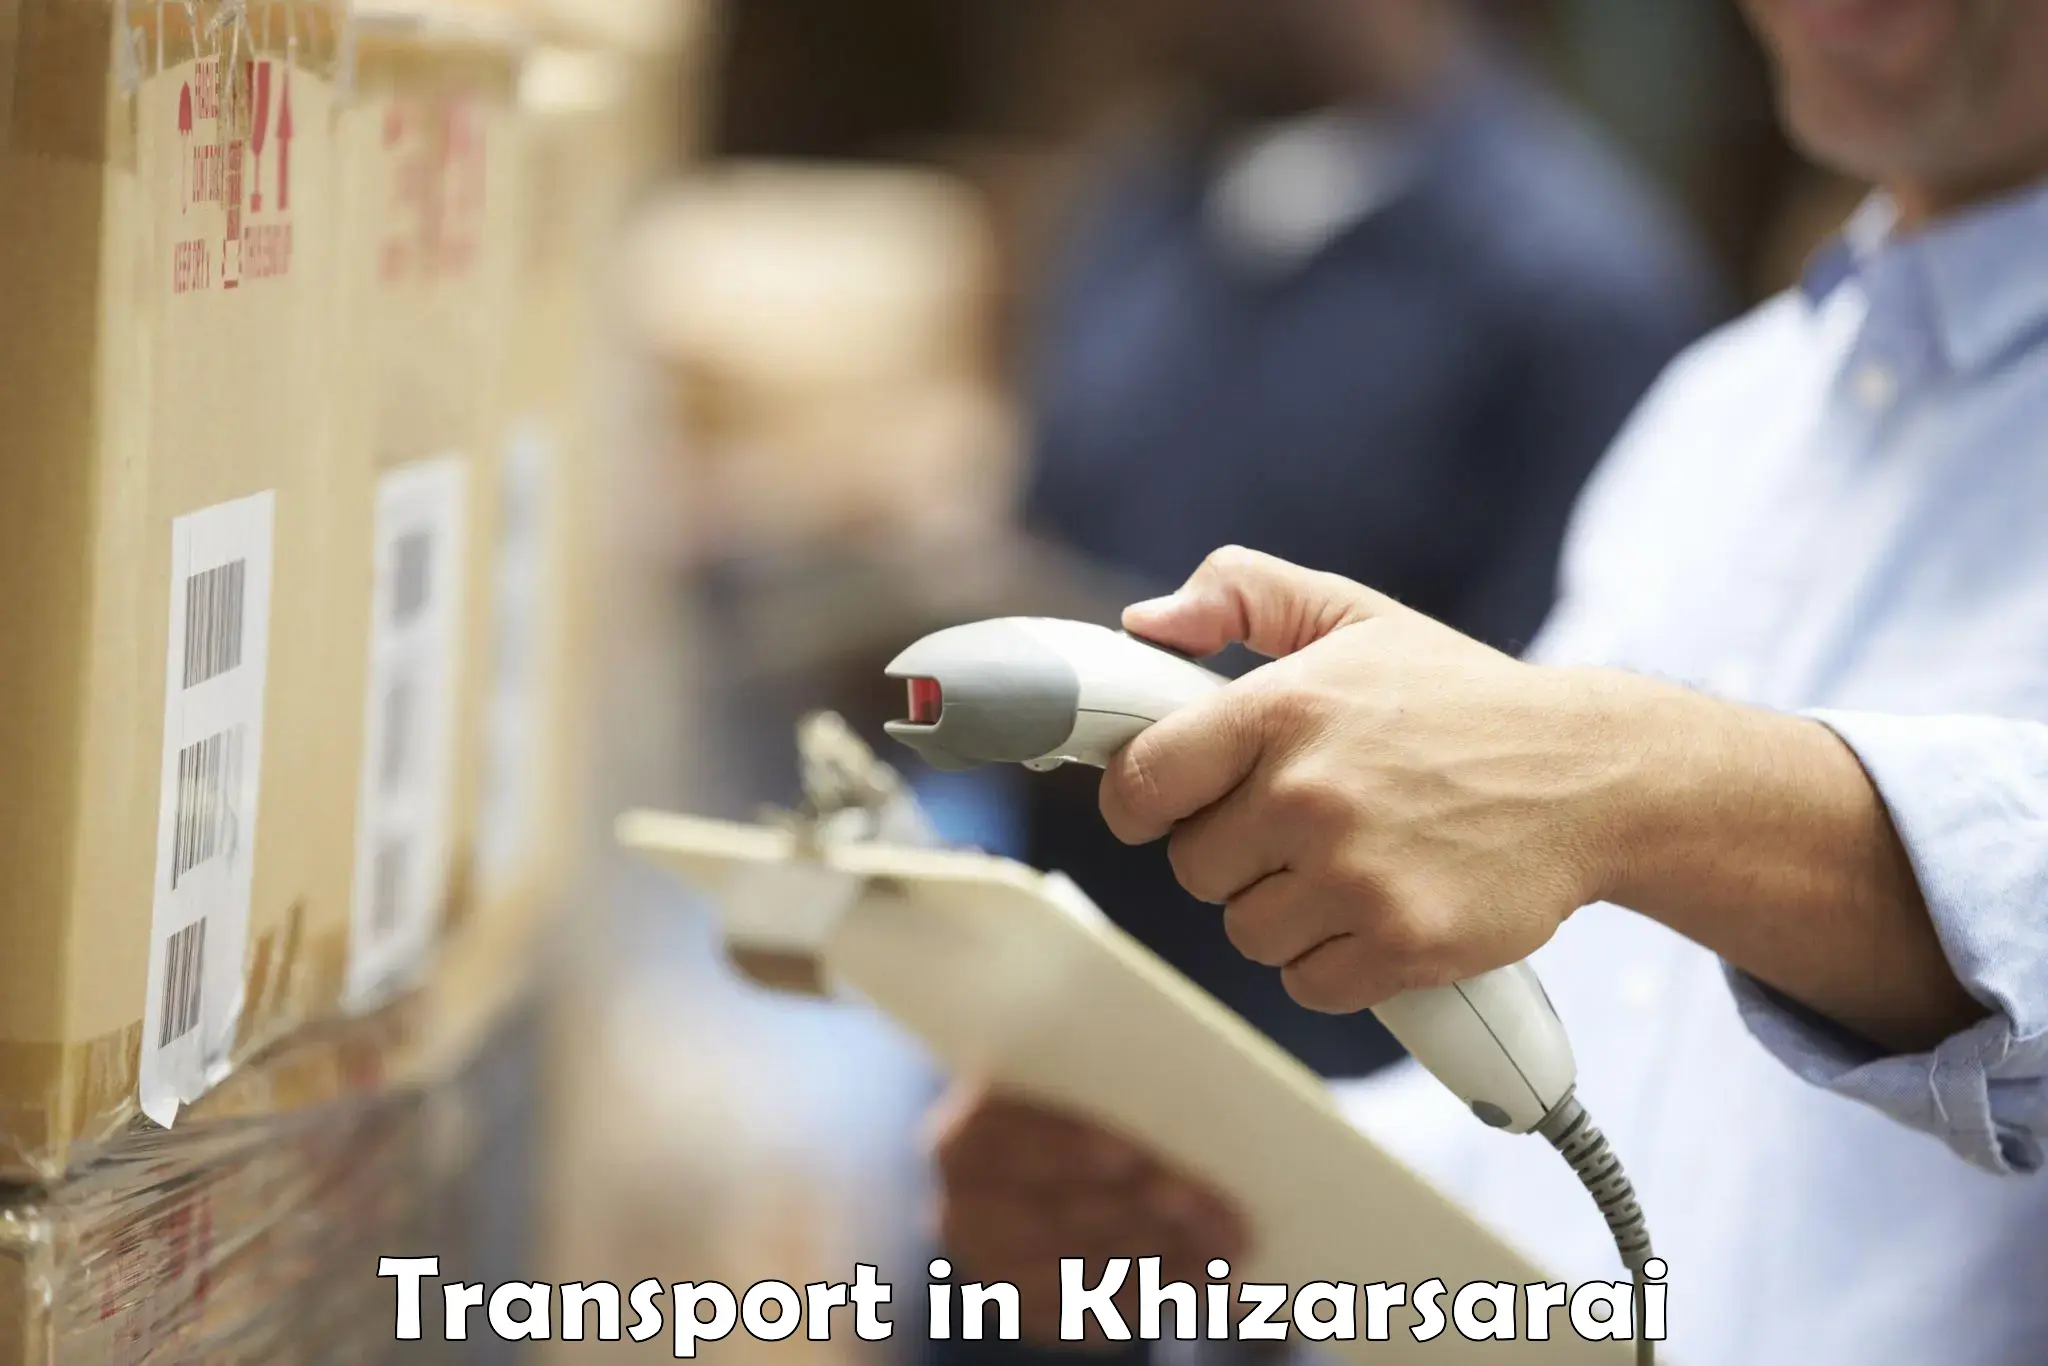 Interstate goods transport in Khizarsarai